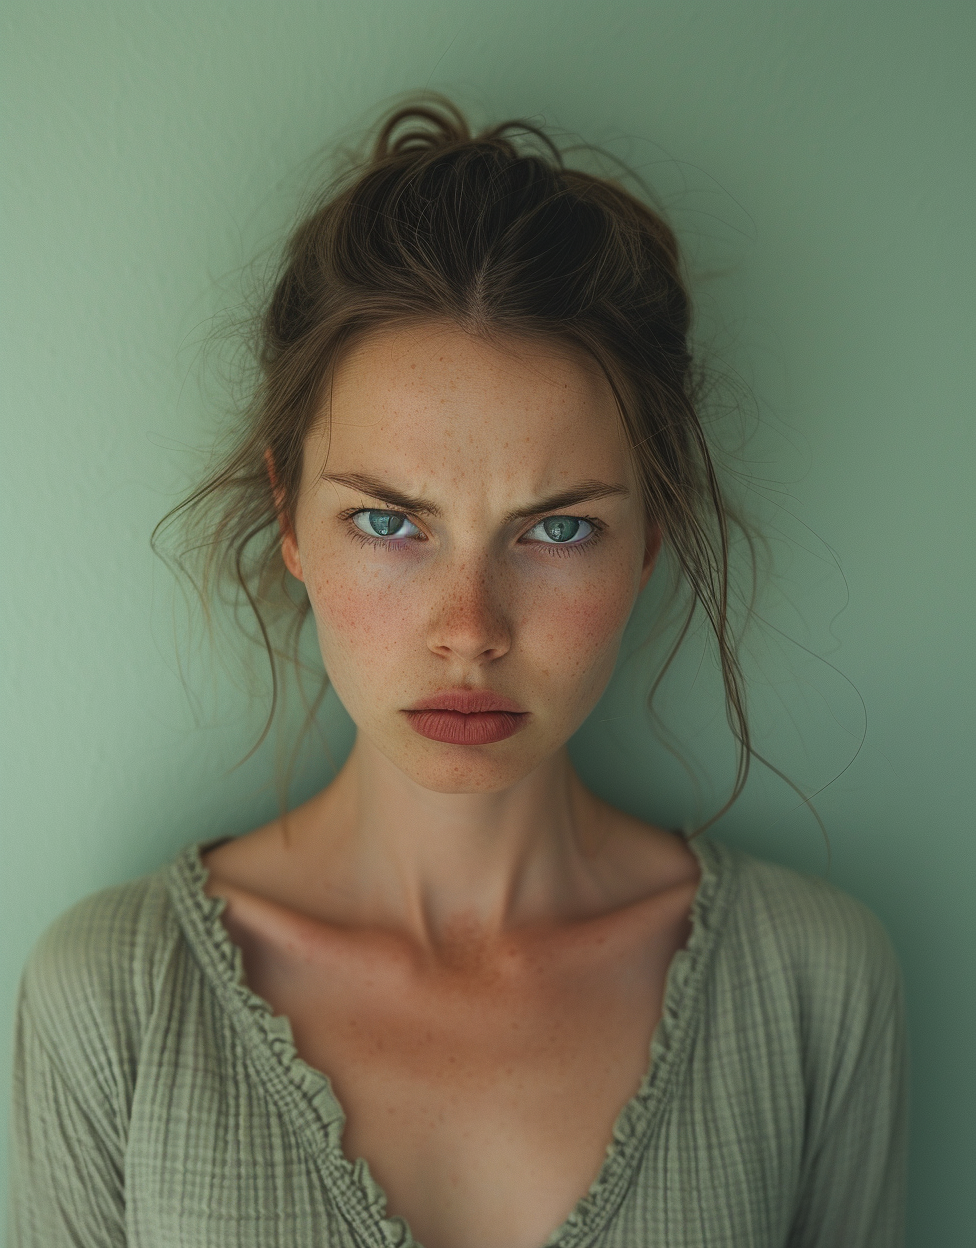 An upset woman | Source: Midjourney